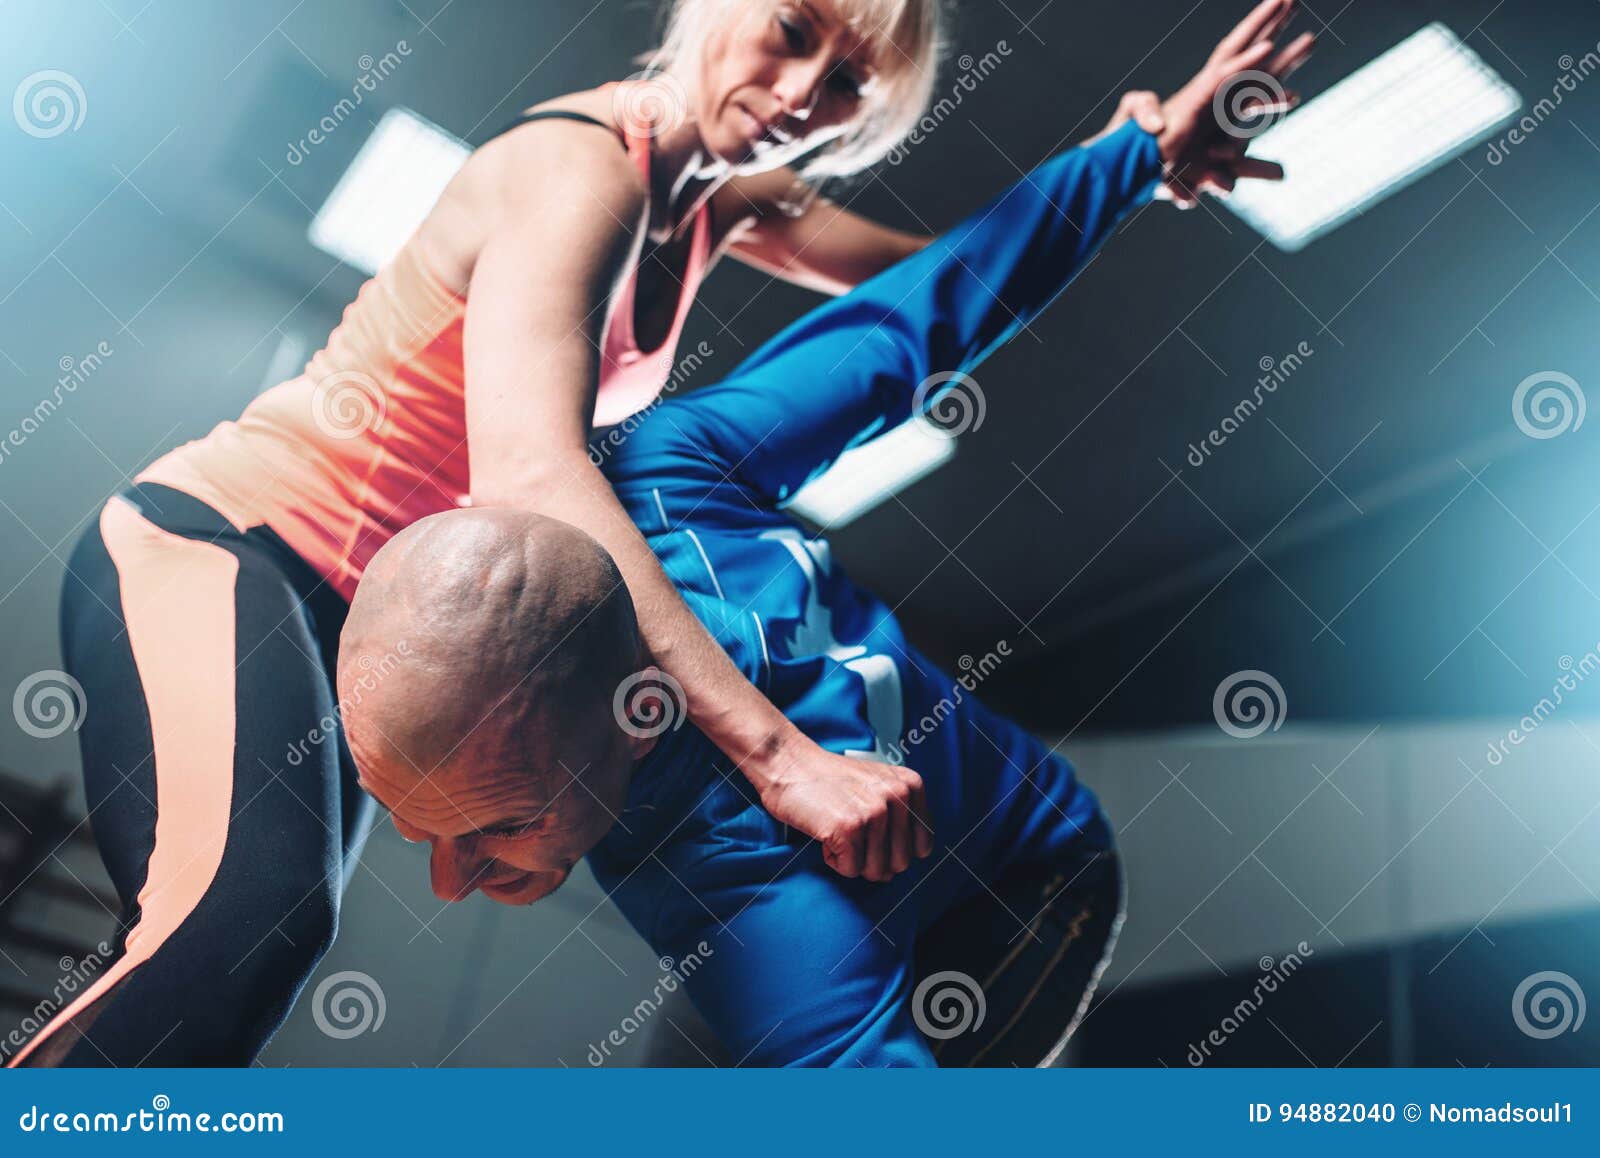 male and female fighters, self-defense technique